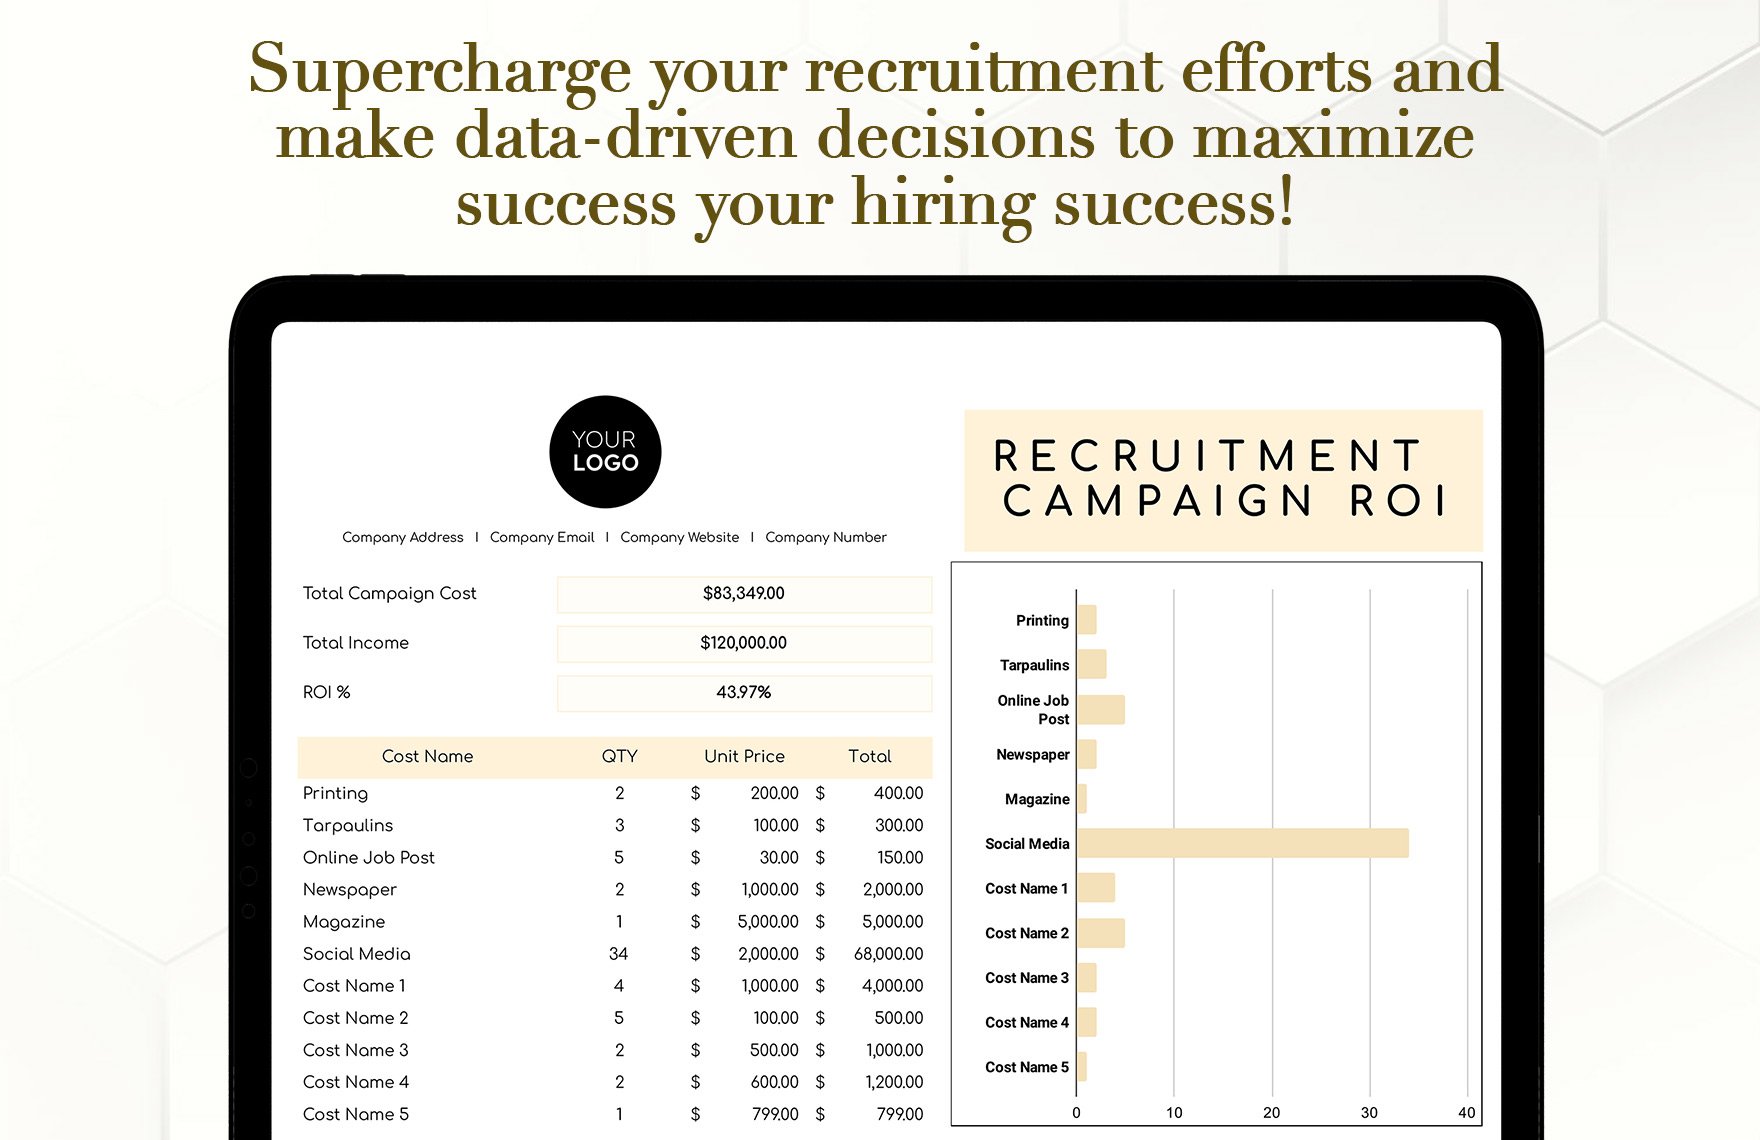 Recruitment Campaign ROI Calculator HR Template